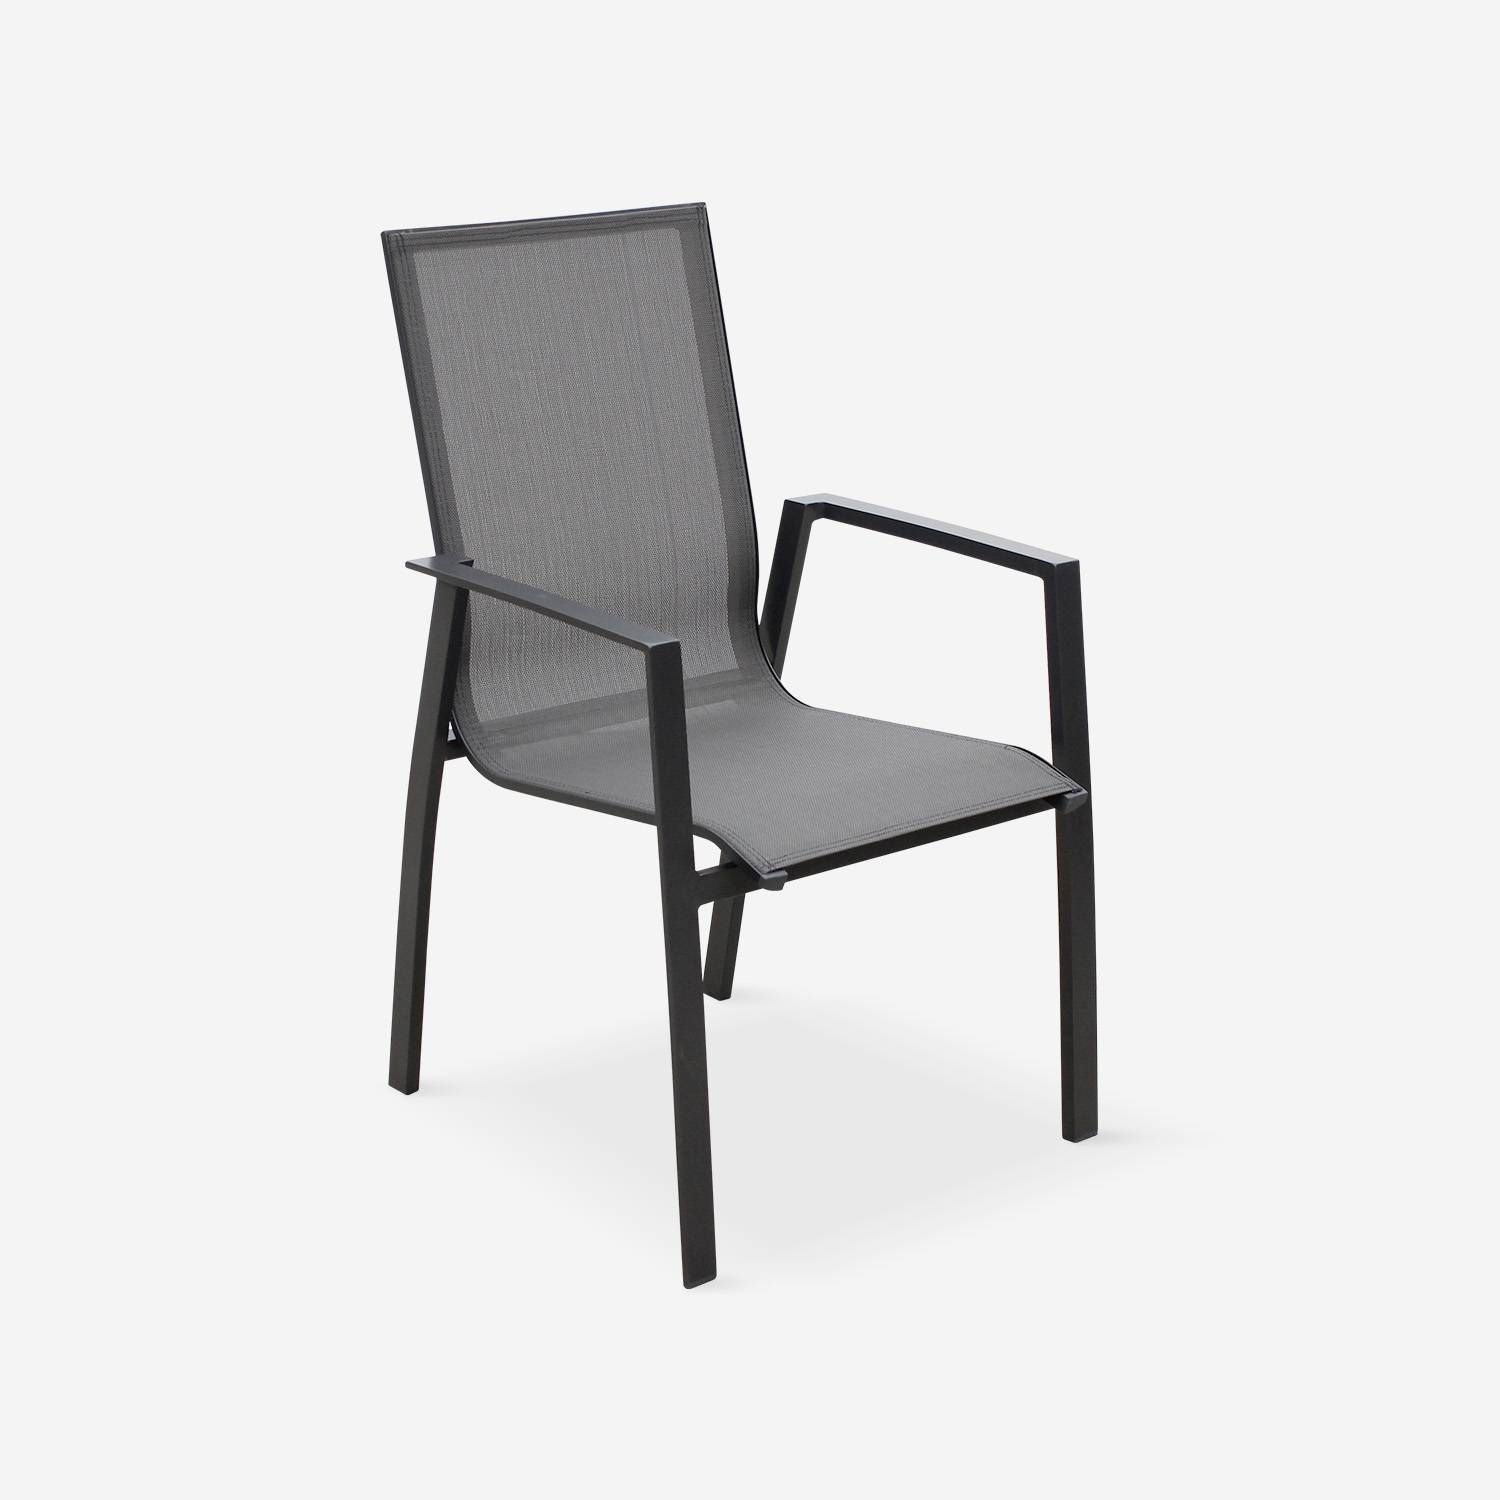 Juego de 2 sillas - Washington - Aluminio antracita y textileno gris oscuro, apilables,sweeek,Photo2